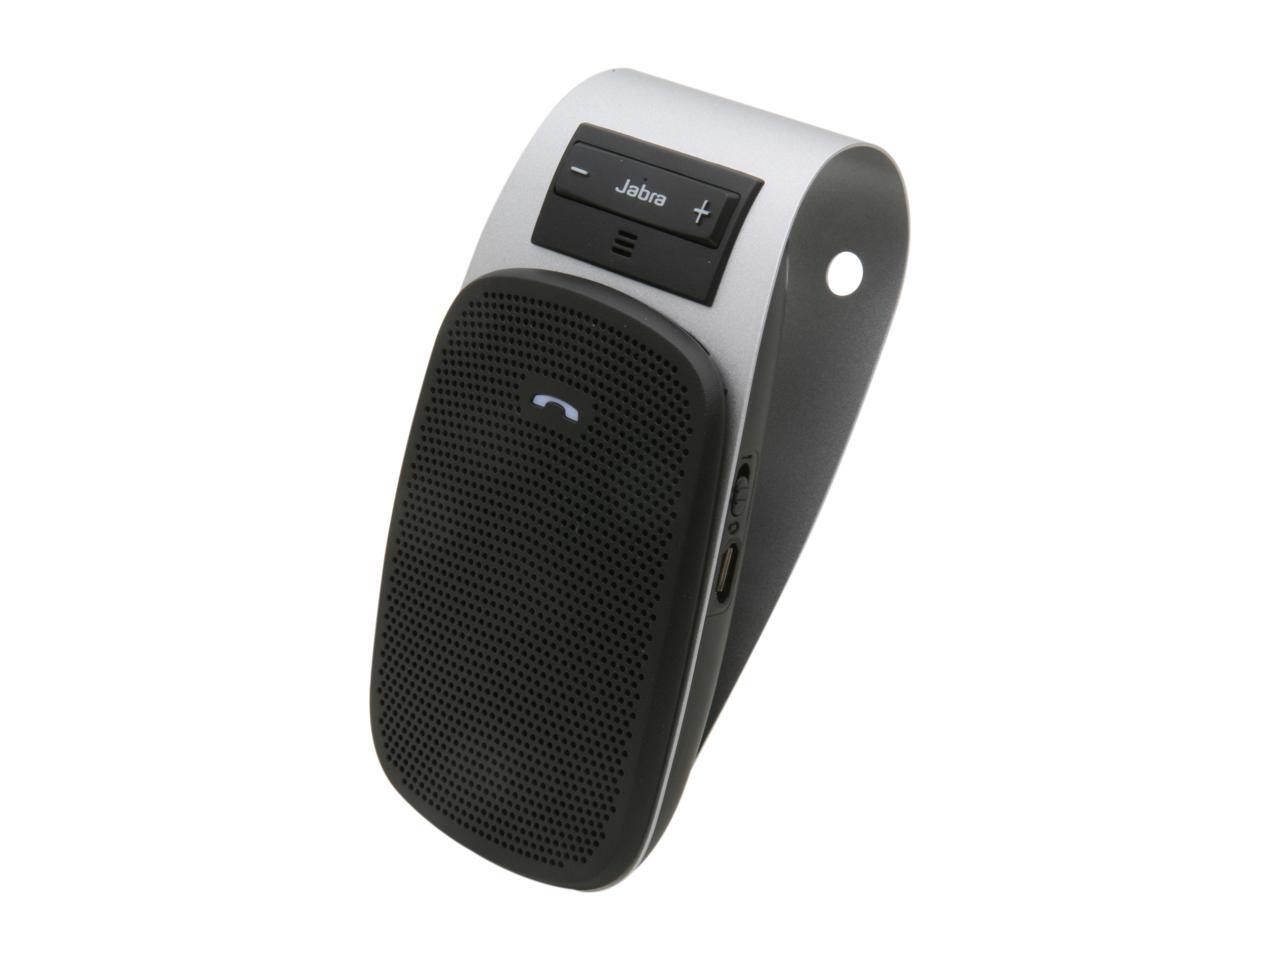 Jabra Drive Hands-Free Wireless Bluetooth Speakerphone Car Kit for Smartphone Devices Black 